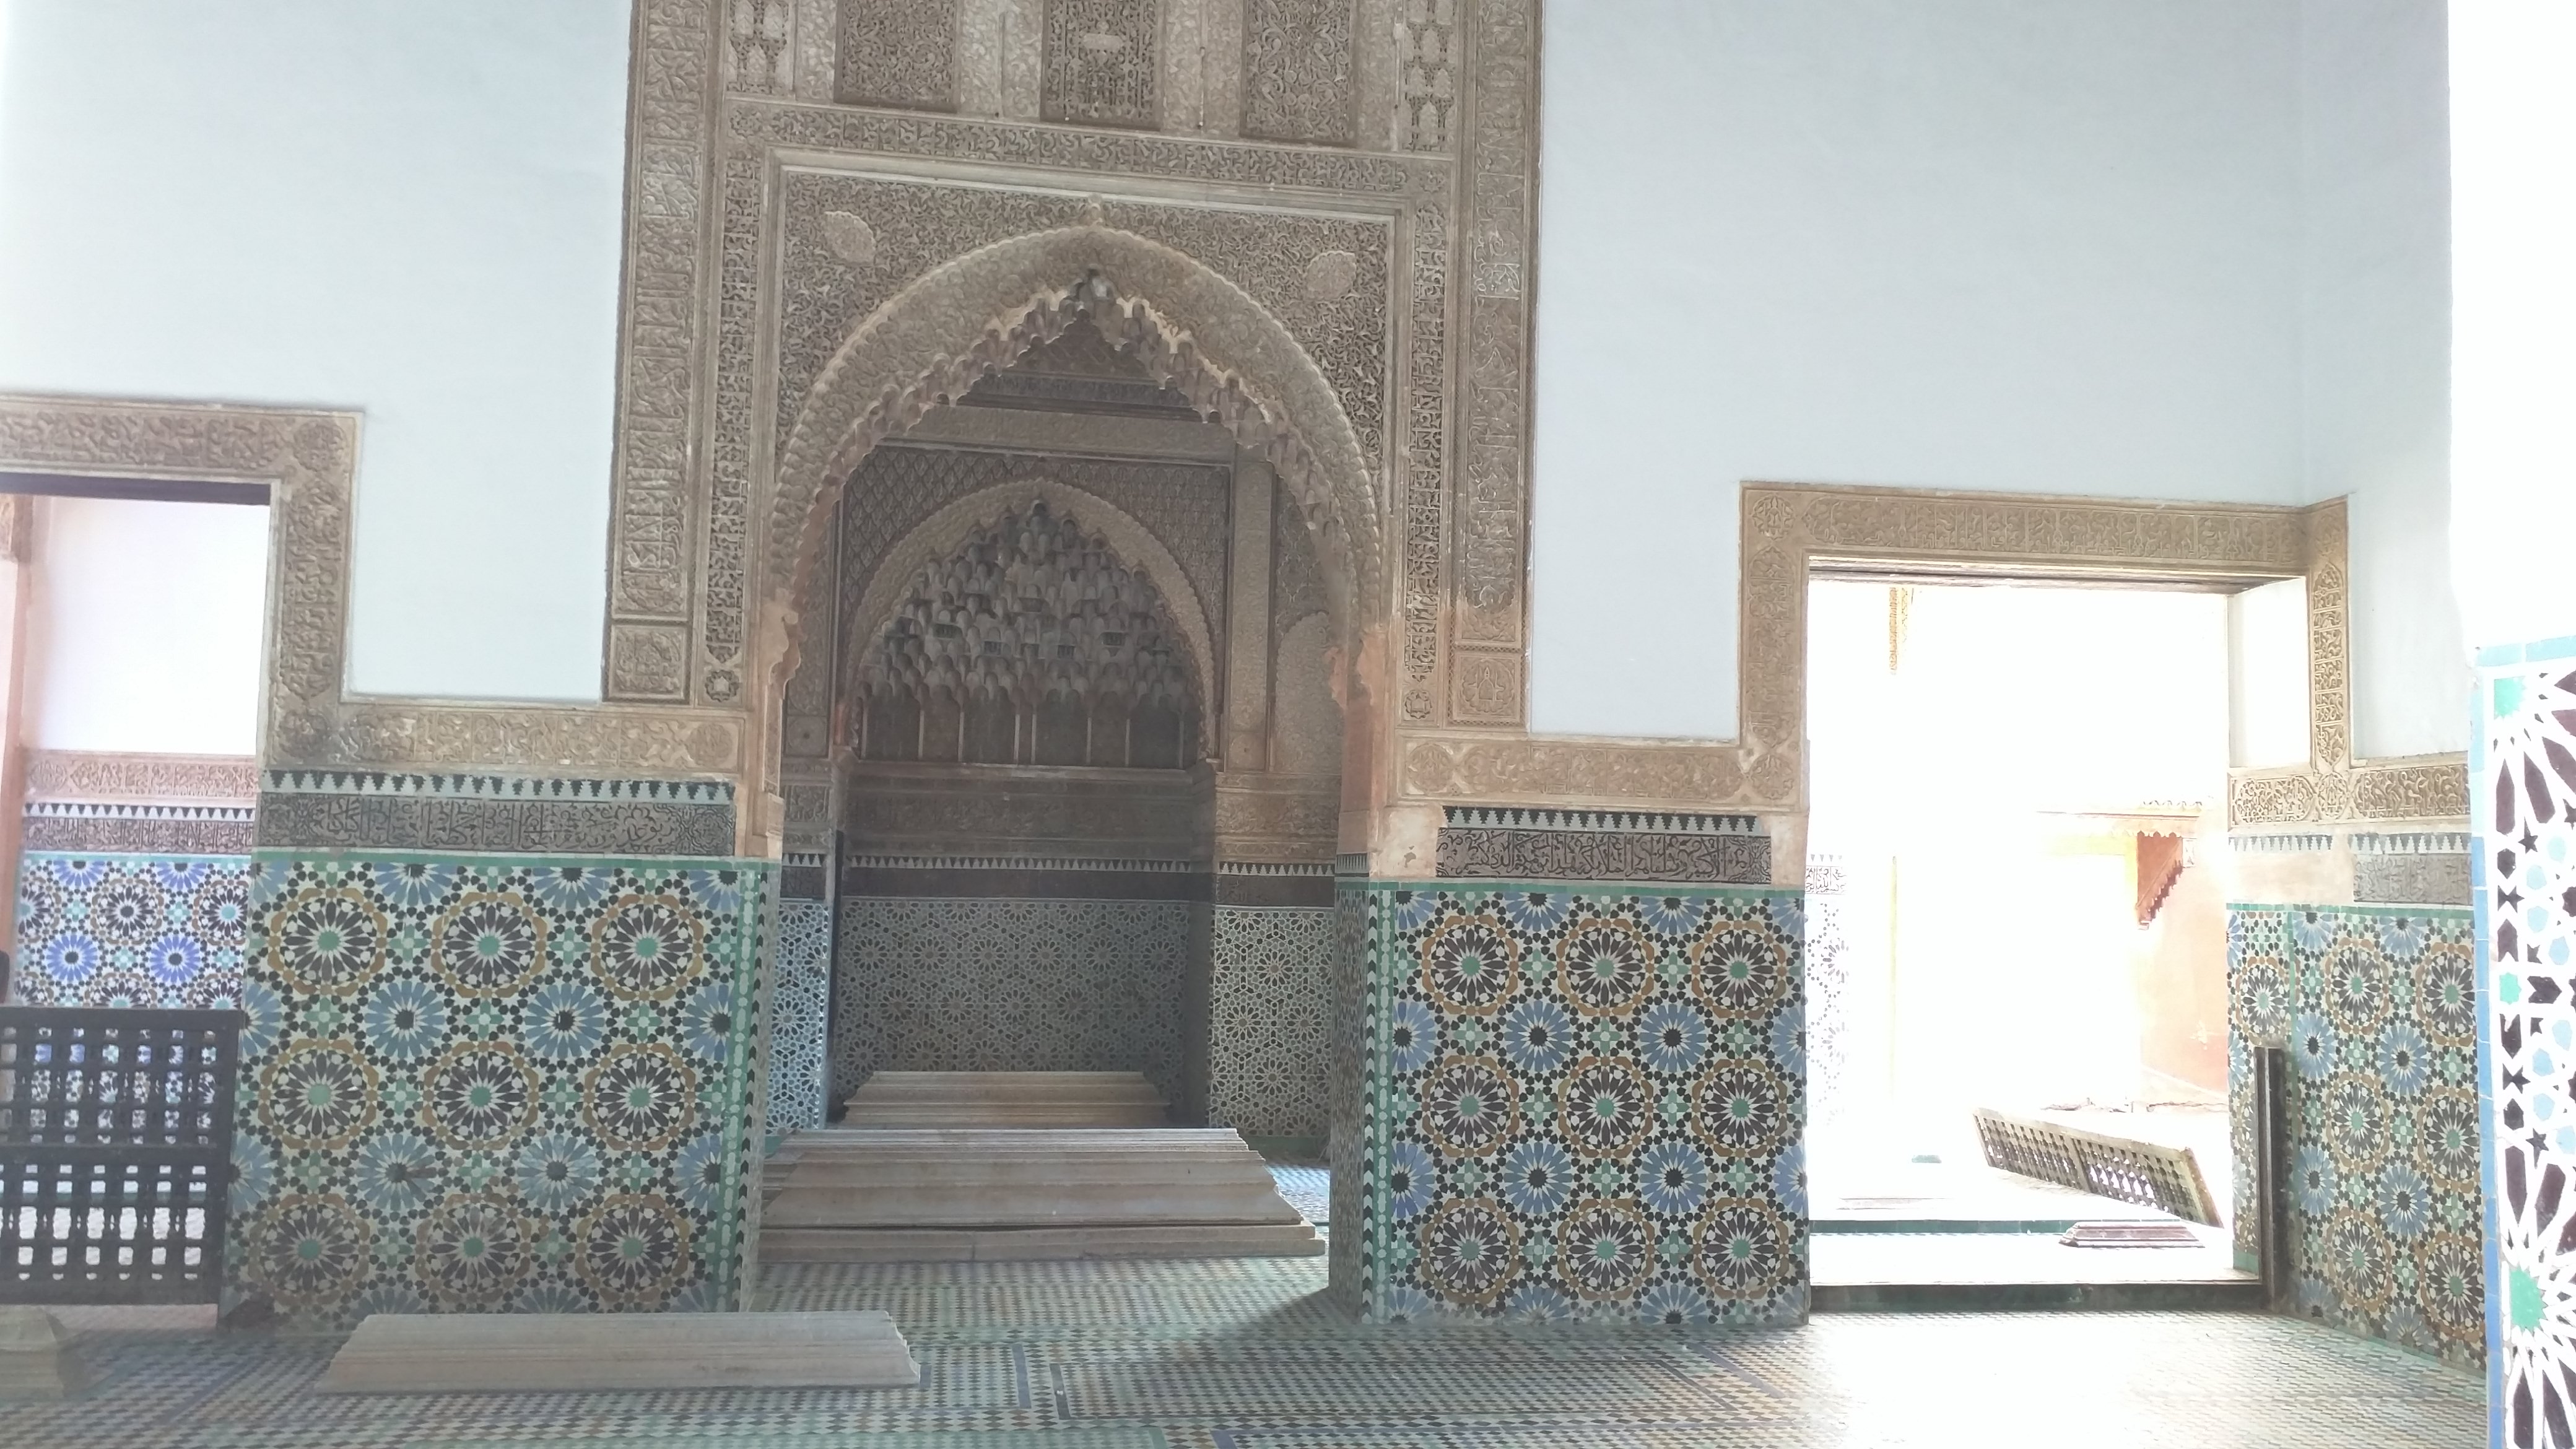 Inside the Saadian Tombs.